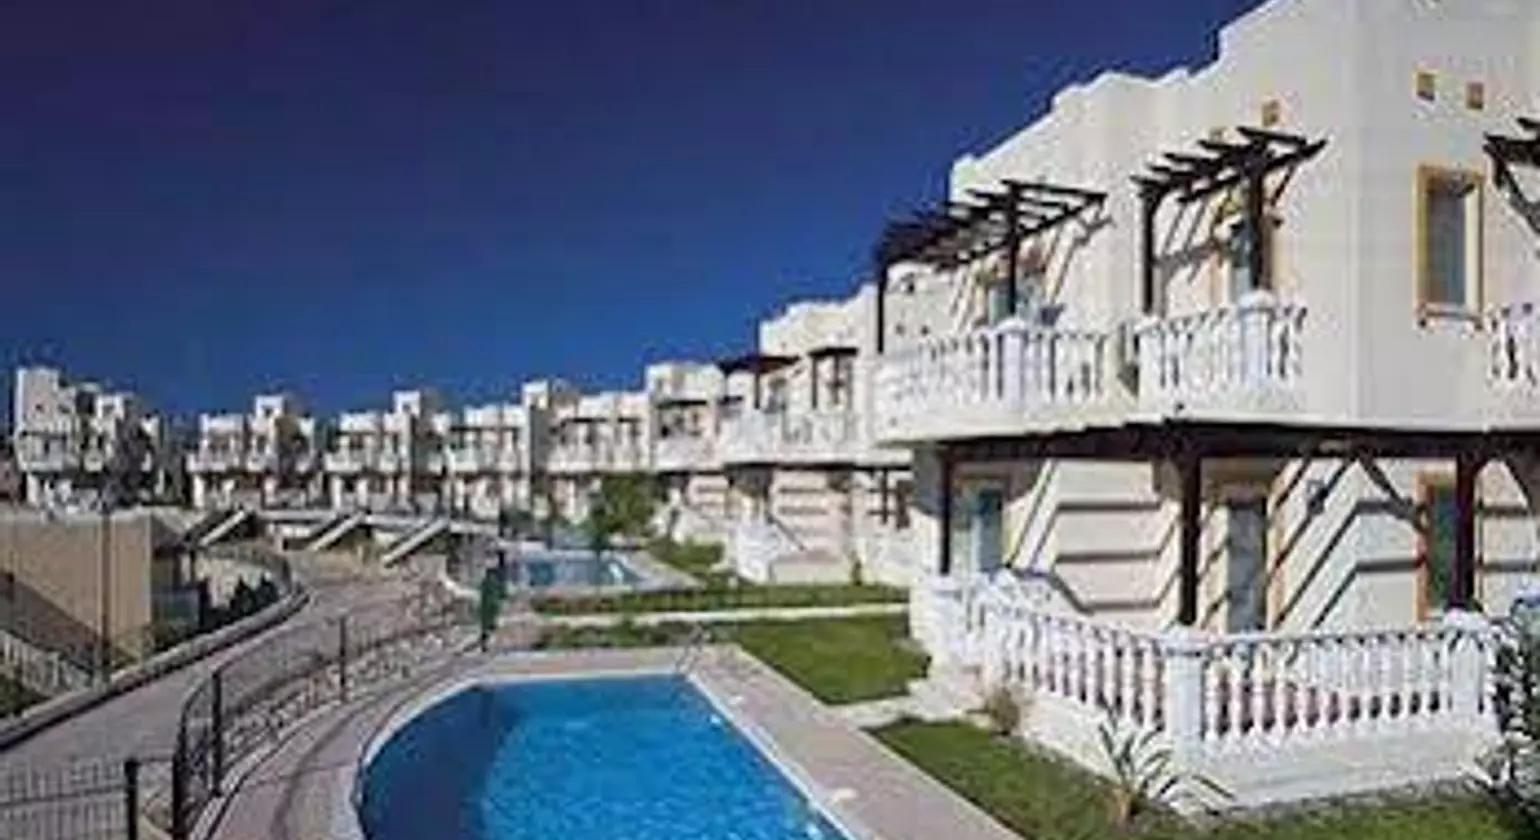 Turquoise Resort Apartments